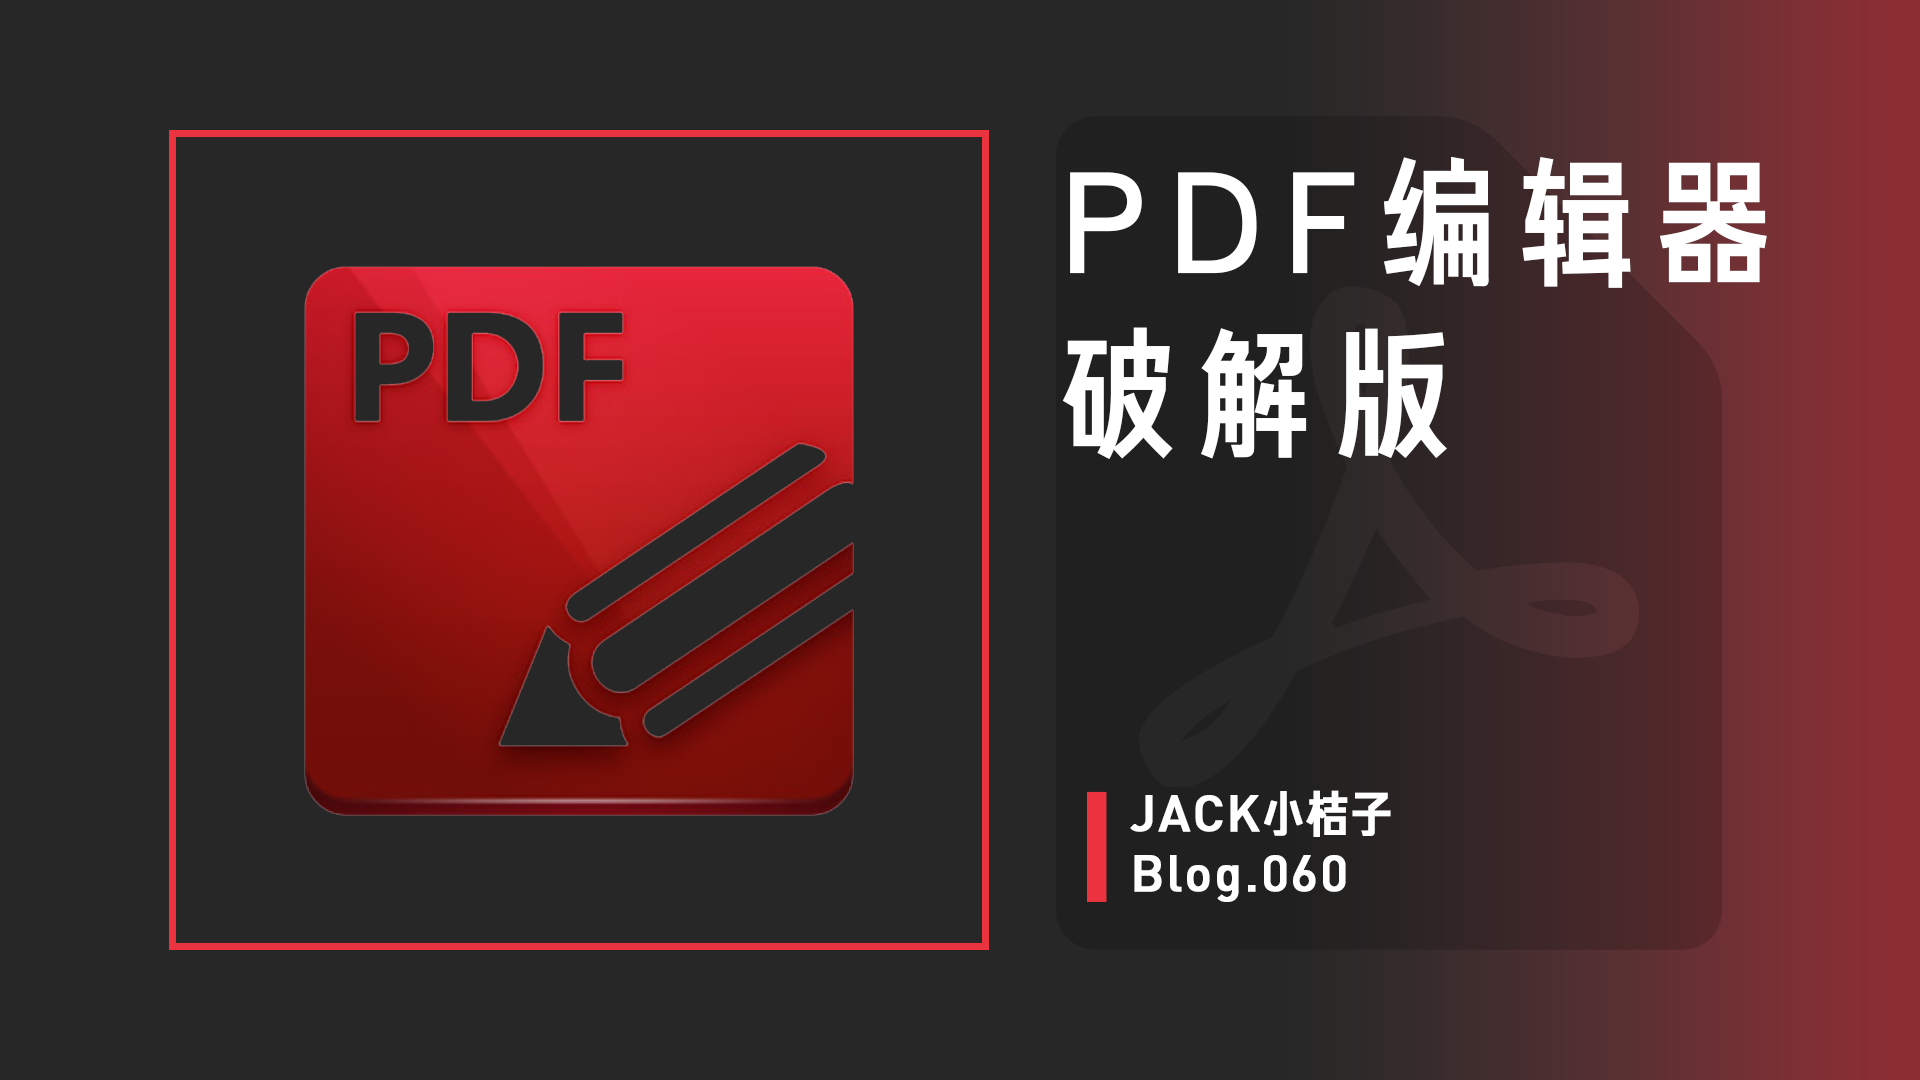 PDF-XChange Editor 便携版